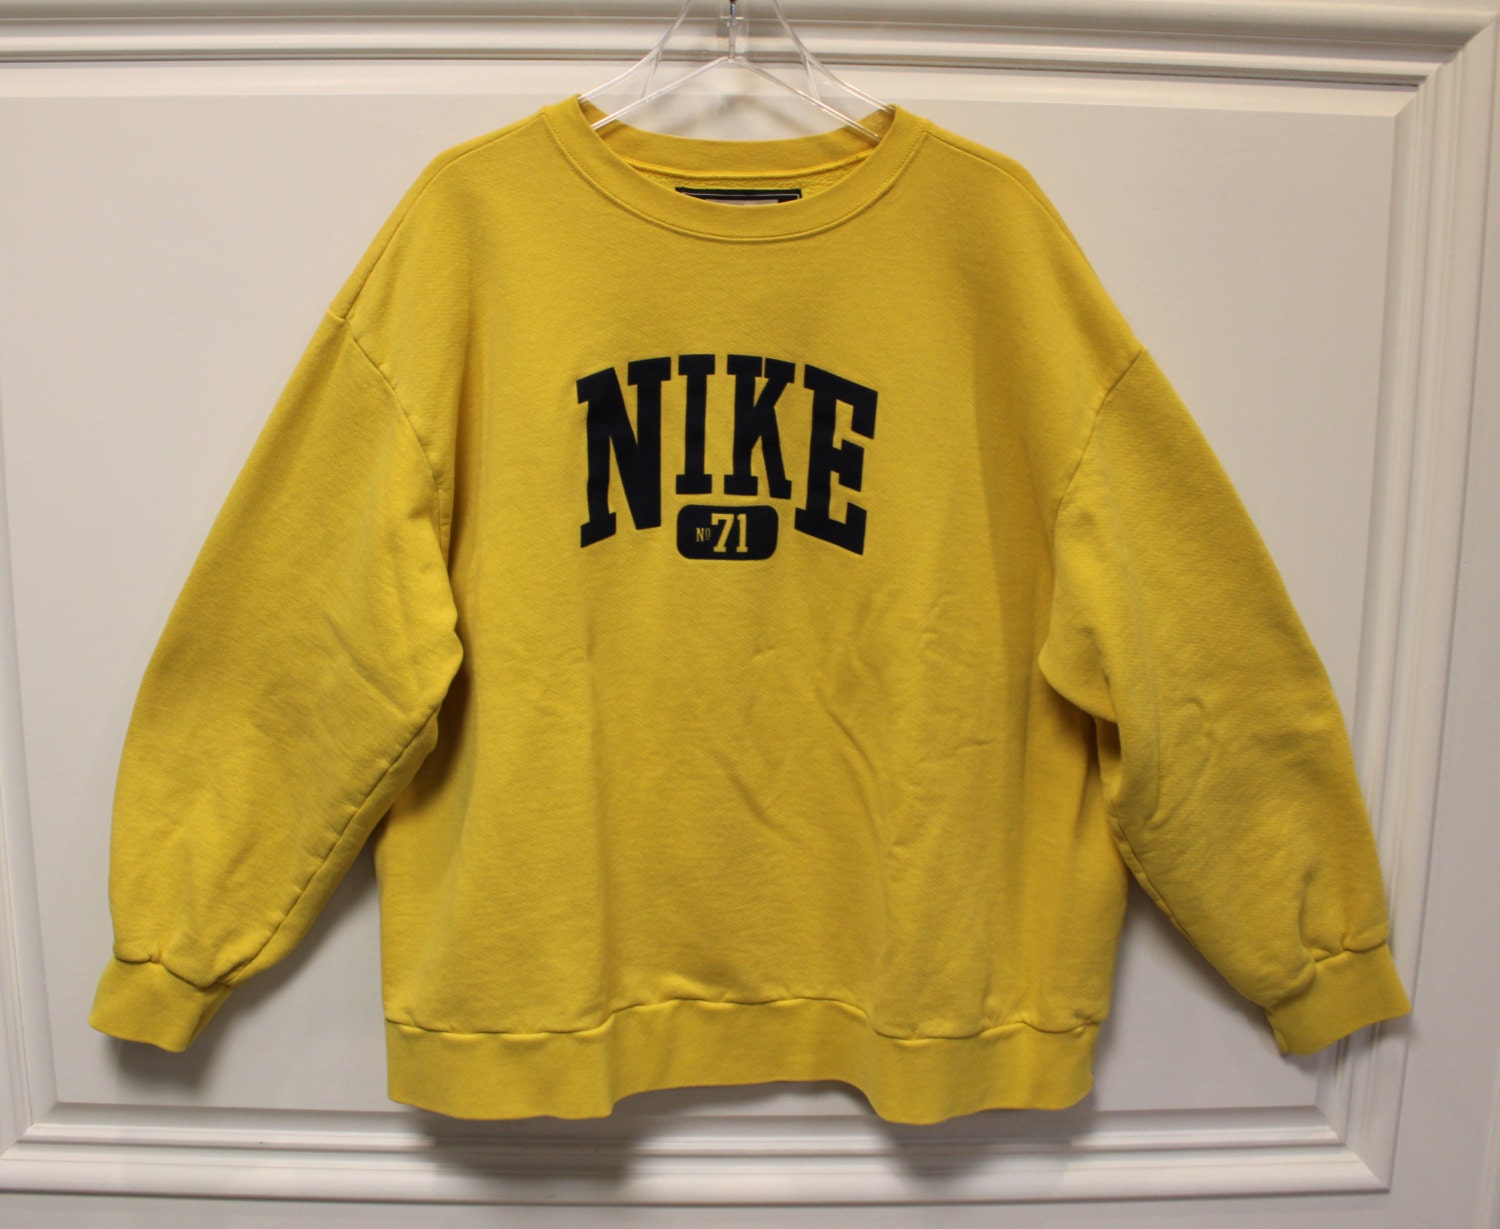 NIKE Vintage Sweatshirt Pullover Jumper Yellow XL X-Large